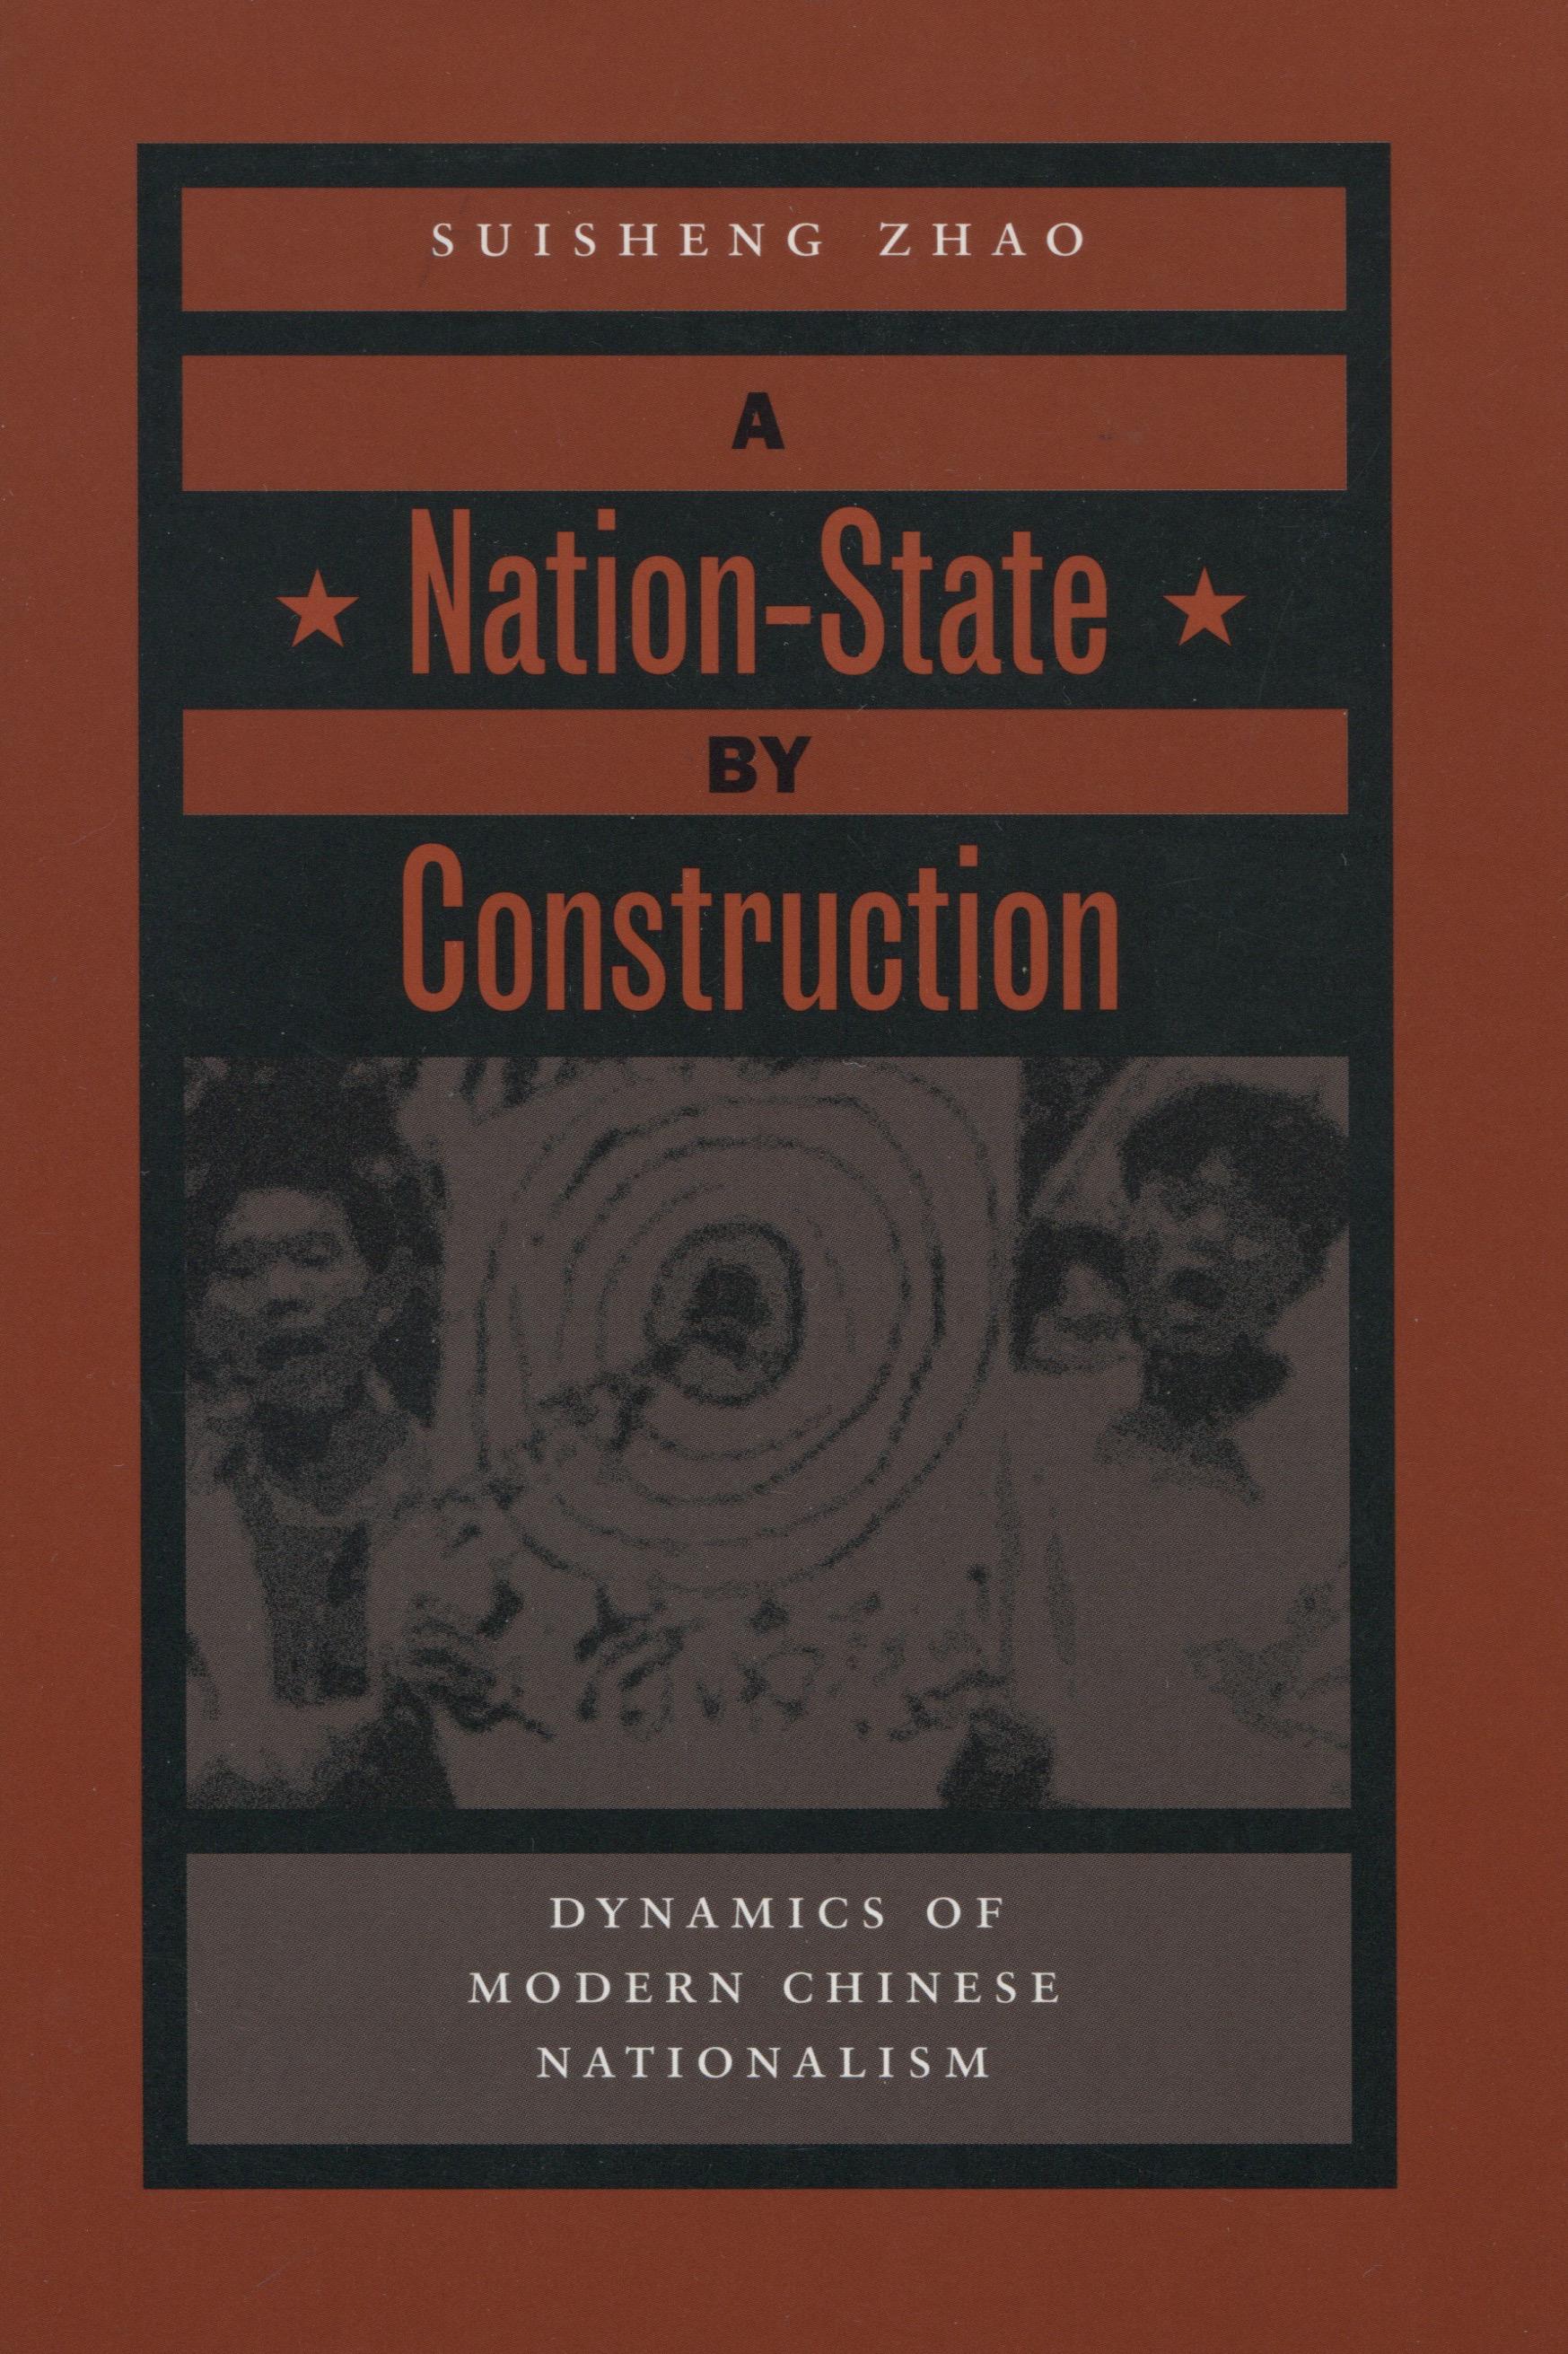 A Nation-State by Construction | Dynamics of Modern Chinese Nationalism | Suisheng Zhao | Taschenbuch | Kartoniert / Broschiert | Englisch | 2004 | STANFORD UNIV PR | EAN 9780804750011 - Zhao, Suisheng